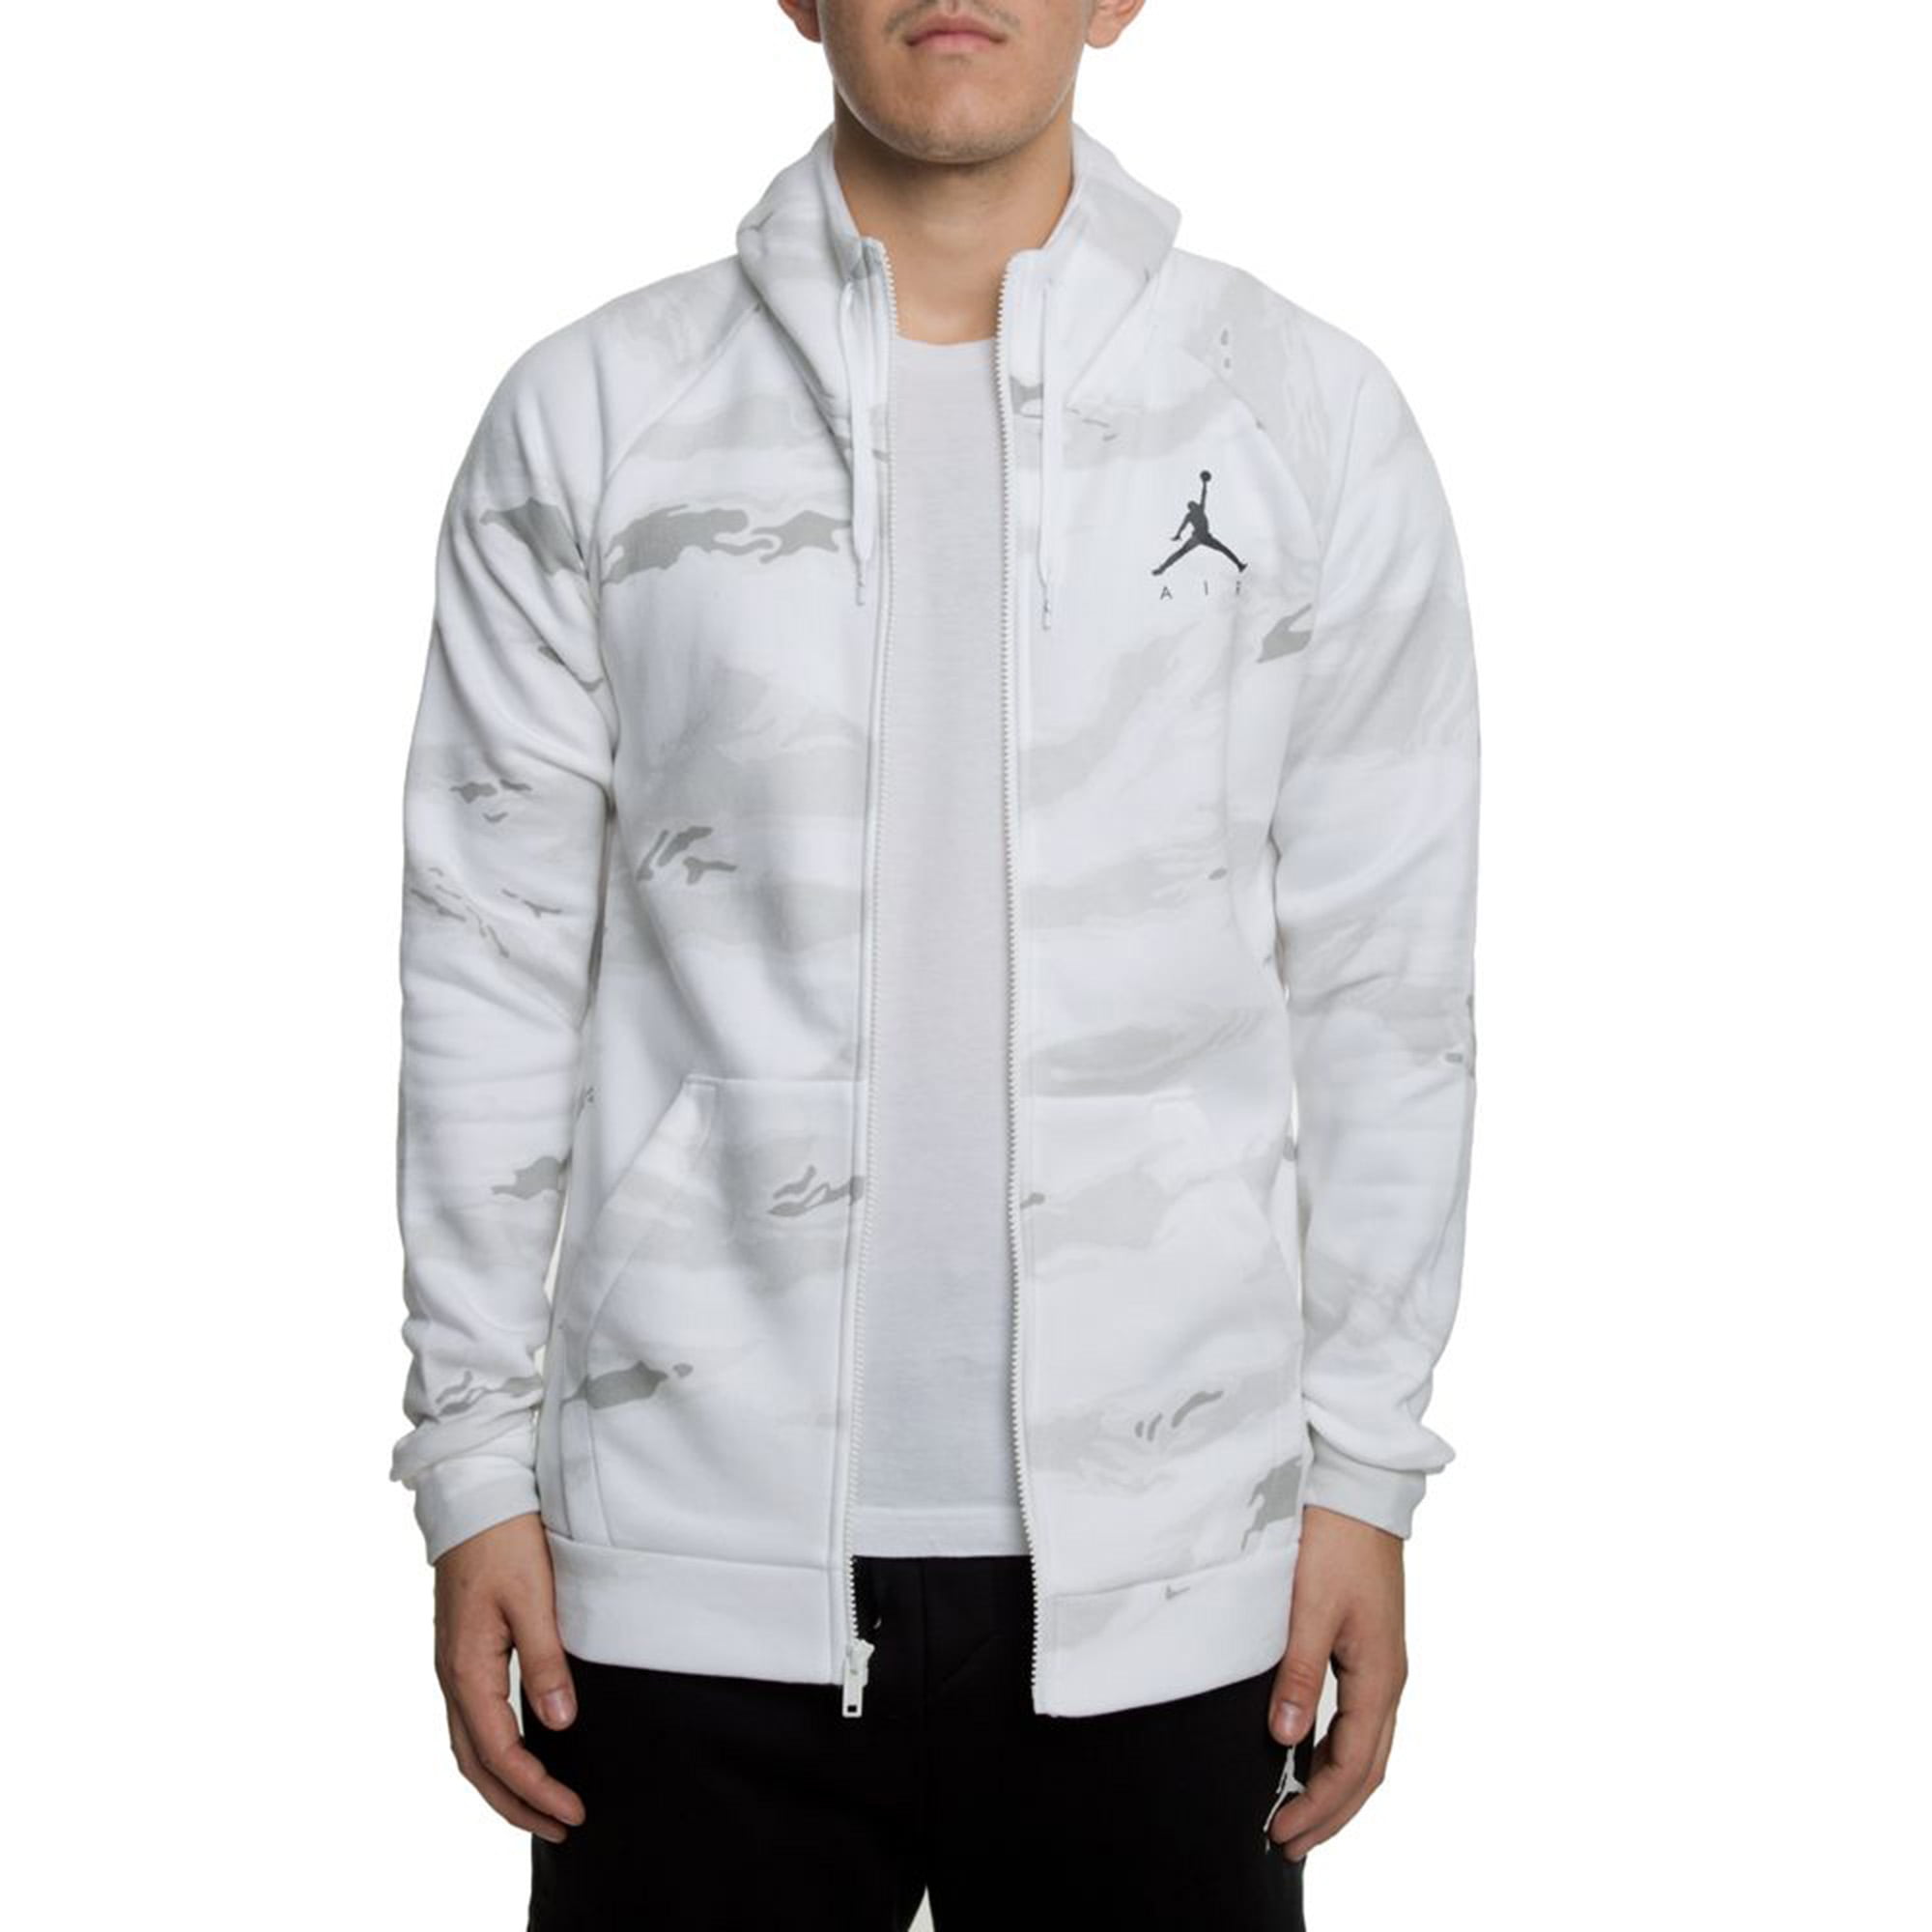 jordan white camo hoodie